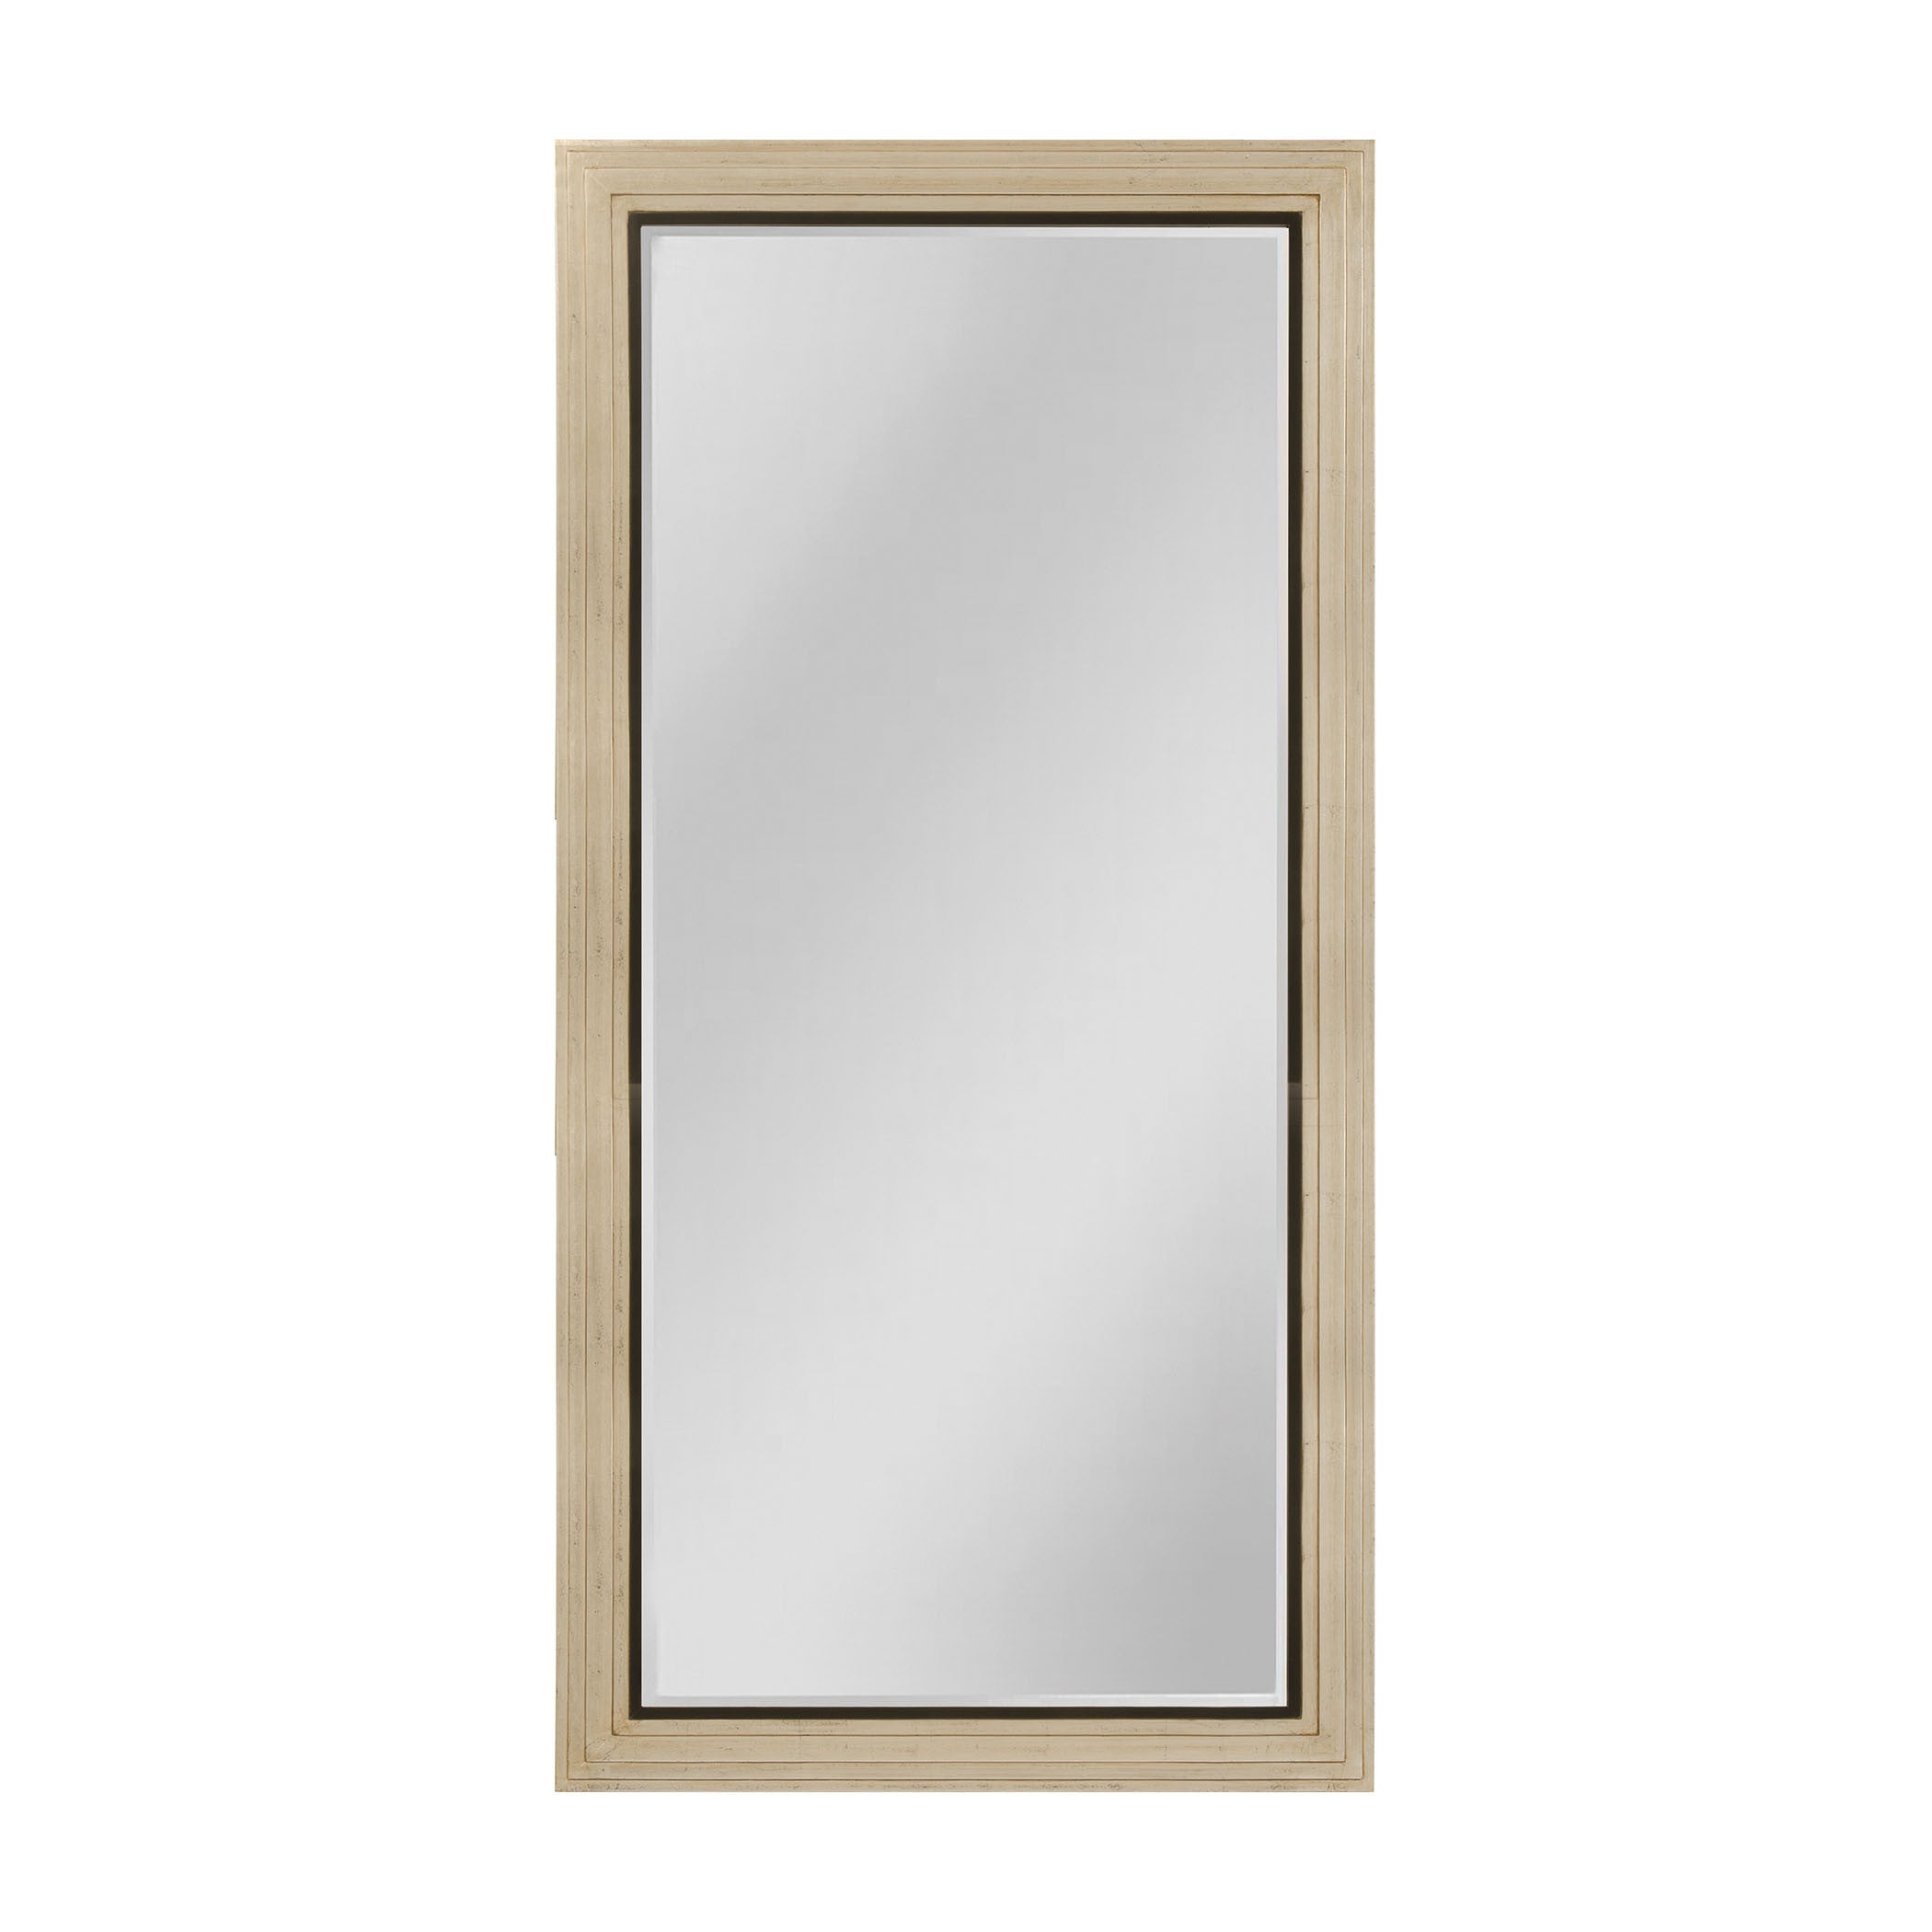 Mirror Masters Mw4069c-0057 Sheldon Collection Shining Silver,gold Mist,black Finish Wall Mirror